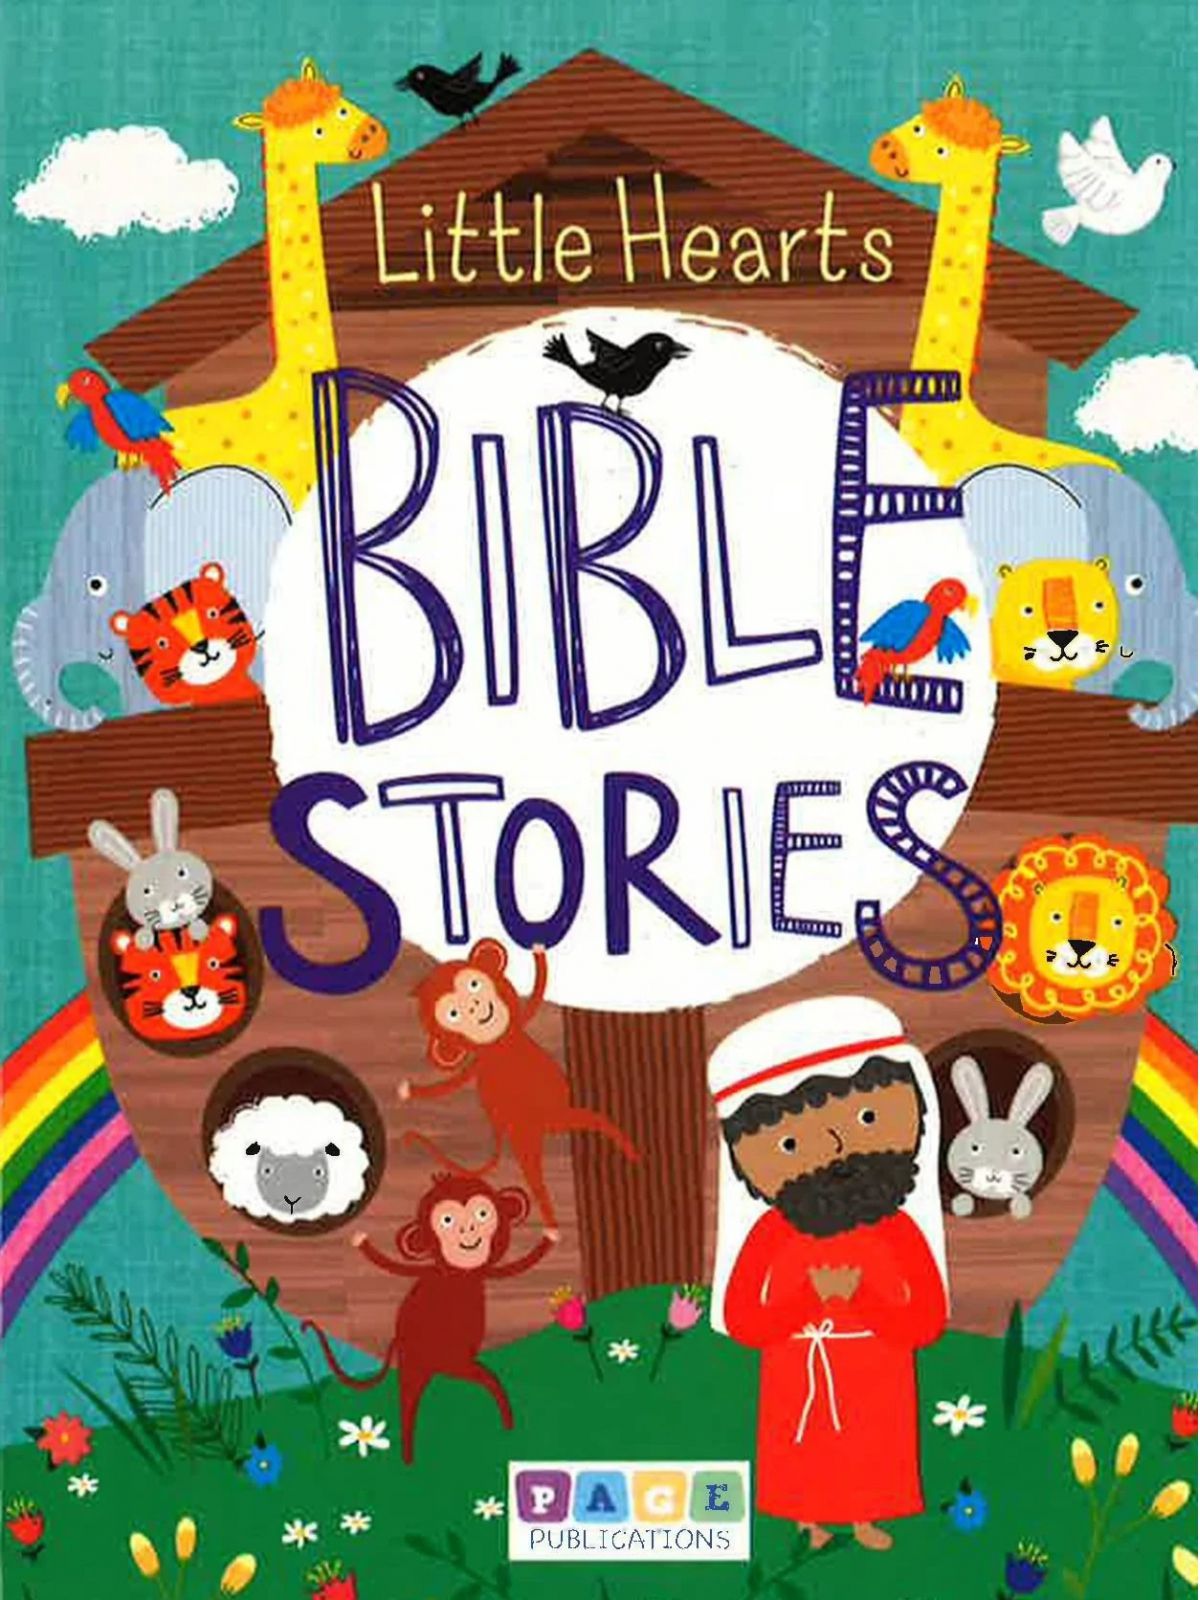 LITTLE HEARTS BIBLE STORIES  Купить Книгу на Английском